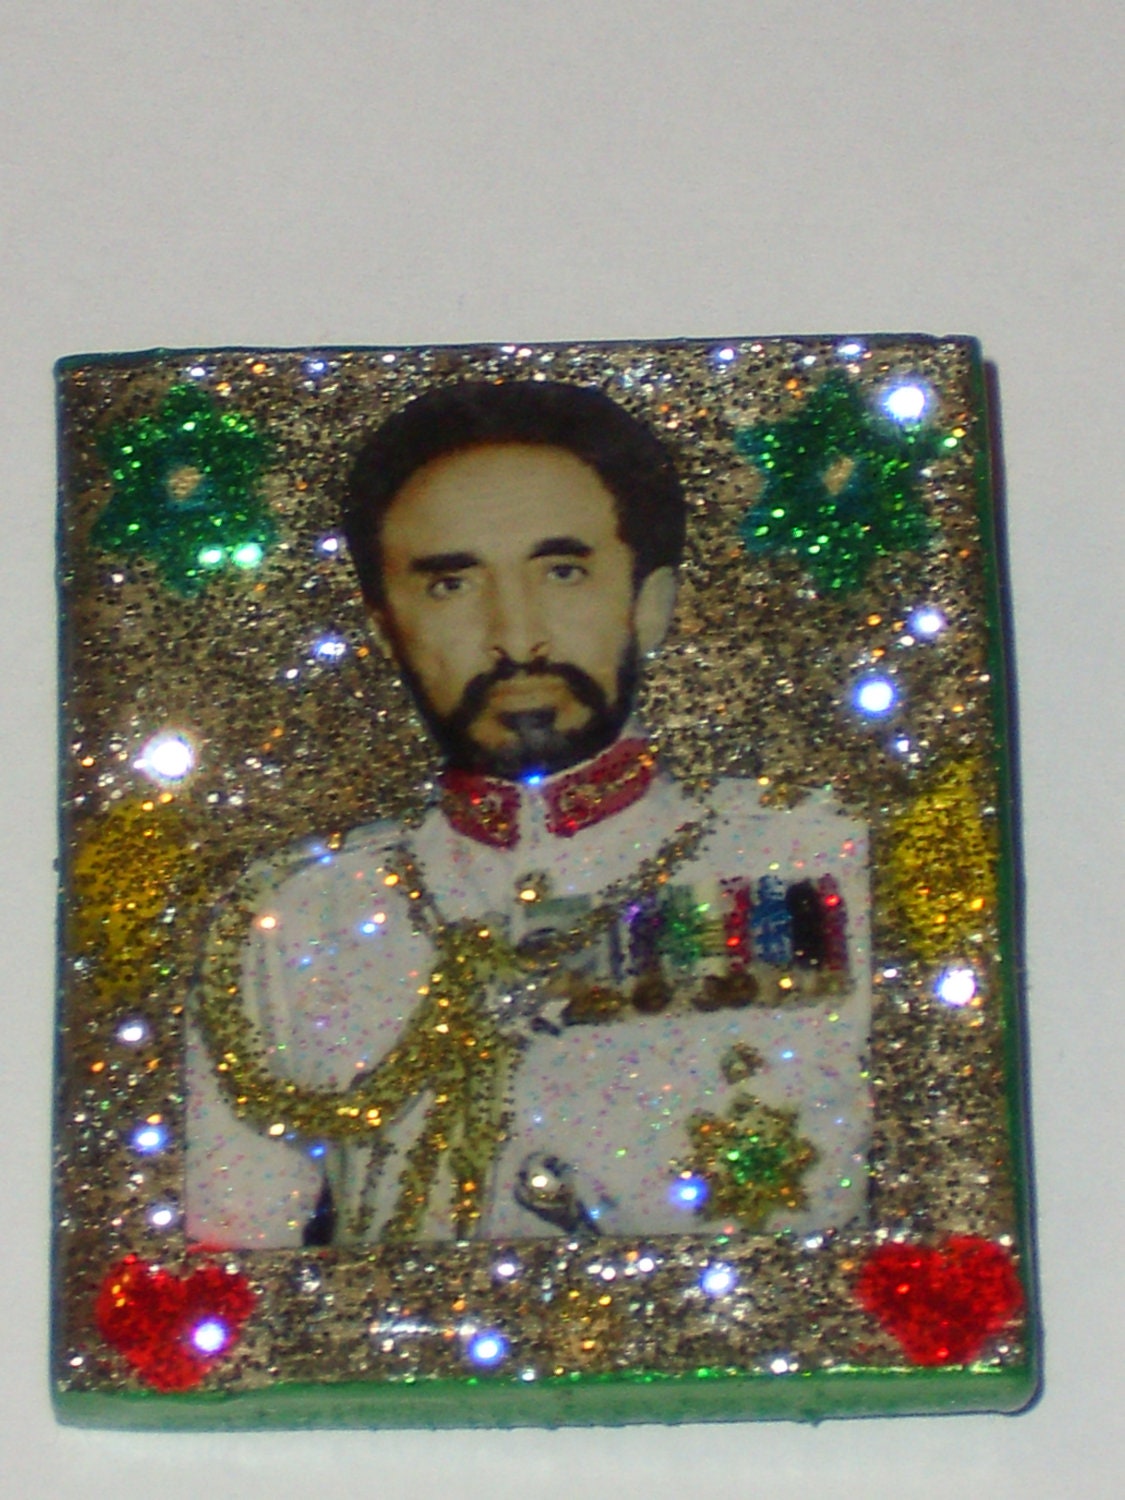 The Royal Touch Rastafari badge of Haile Selassie the First of Ethiopia